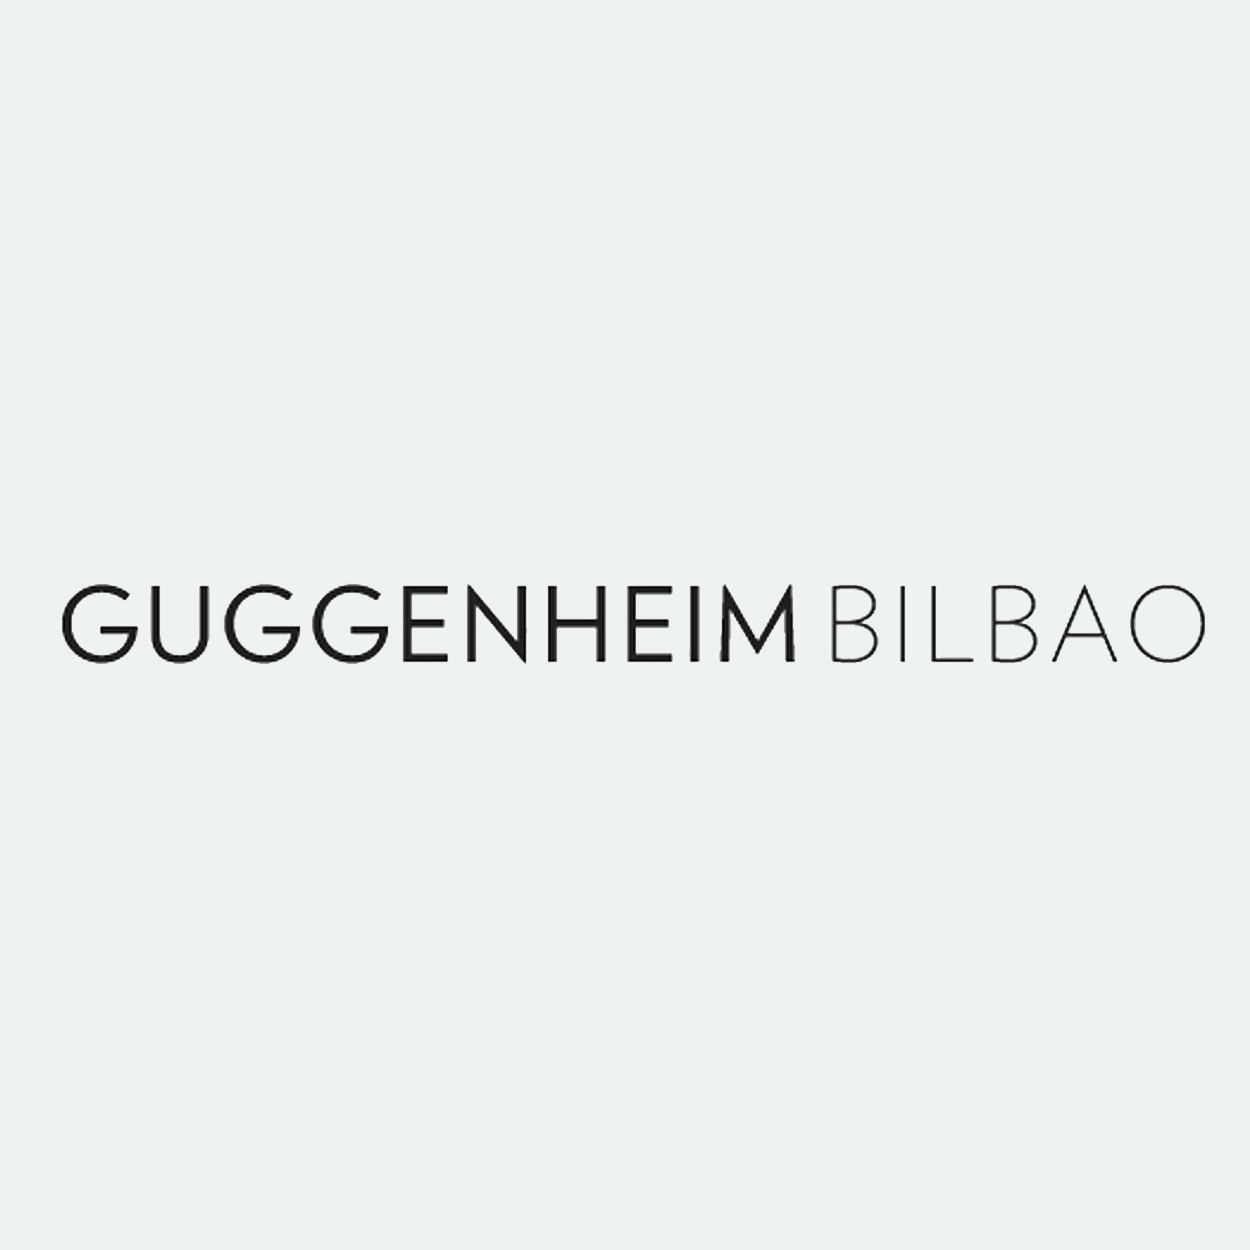 logo guggenheim bilbao